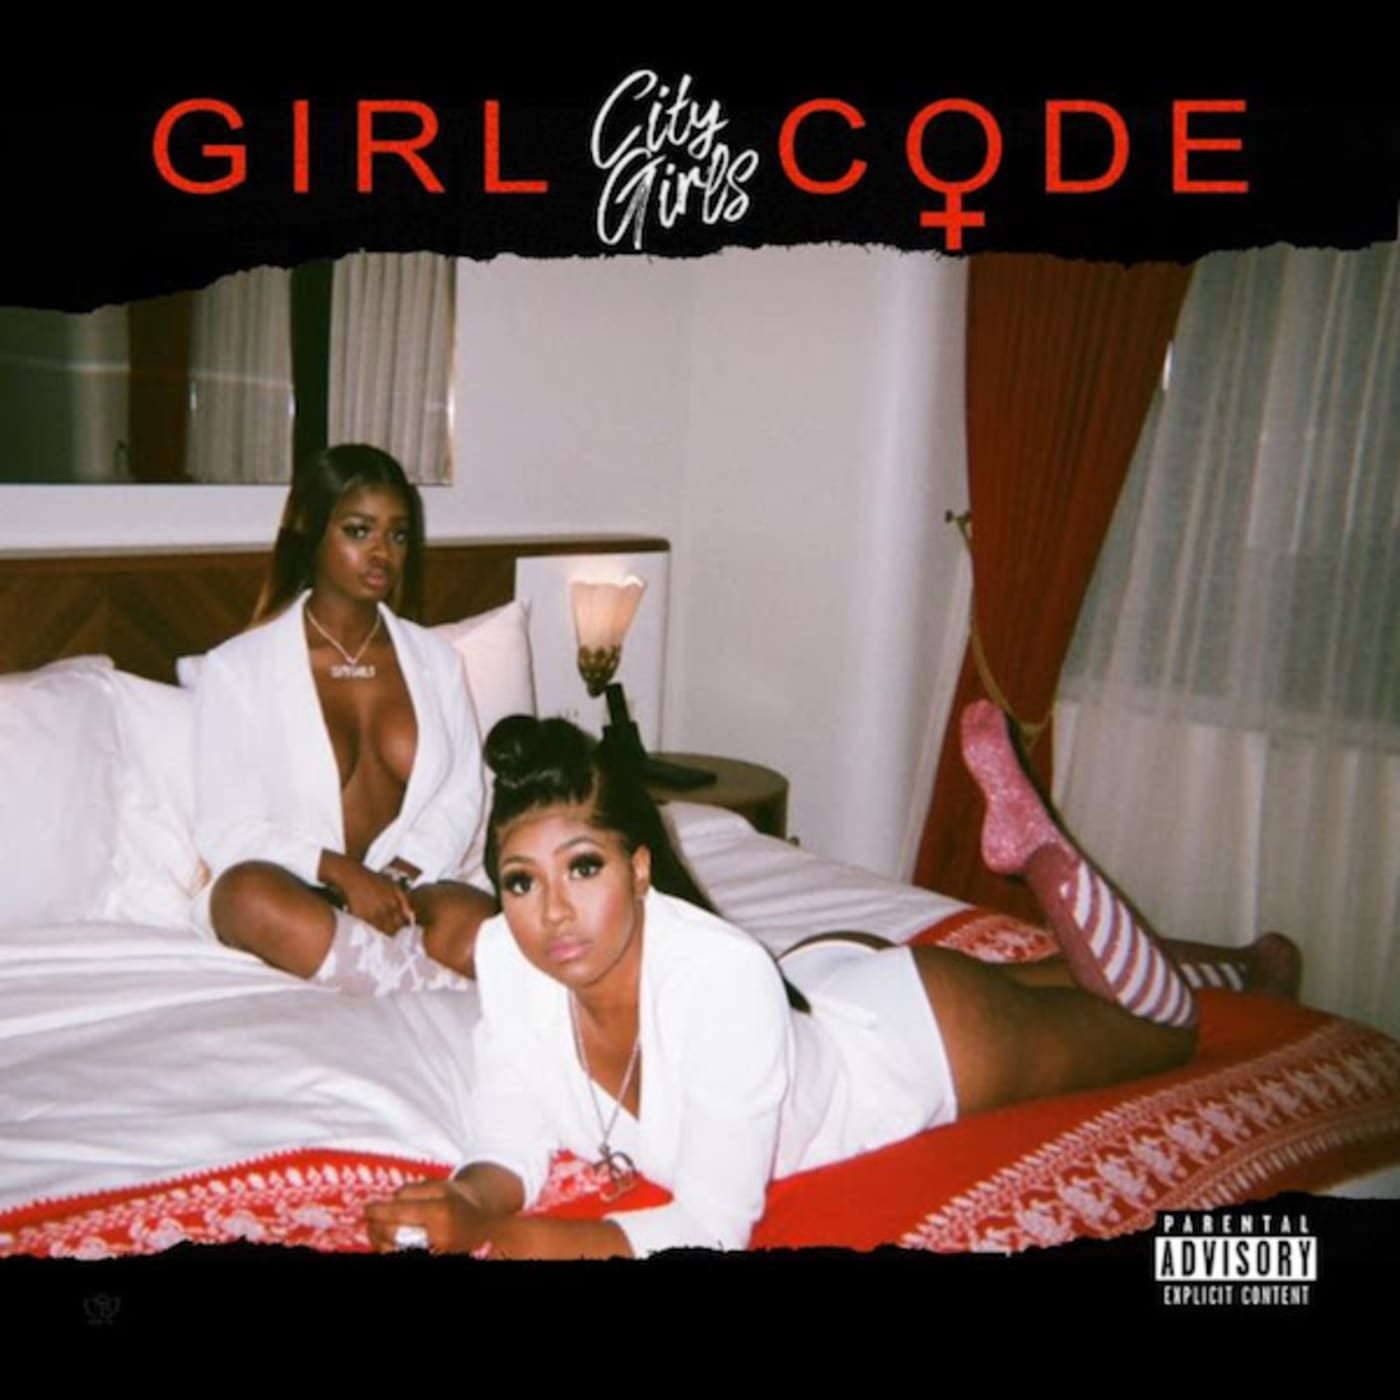 City Girls debut album